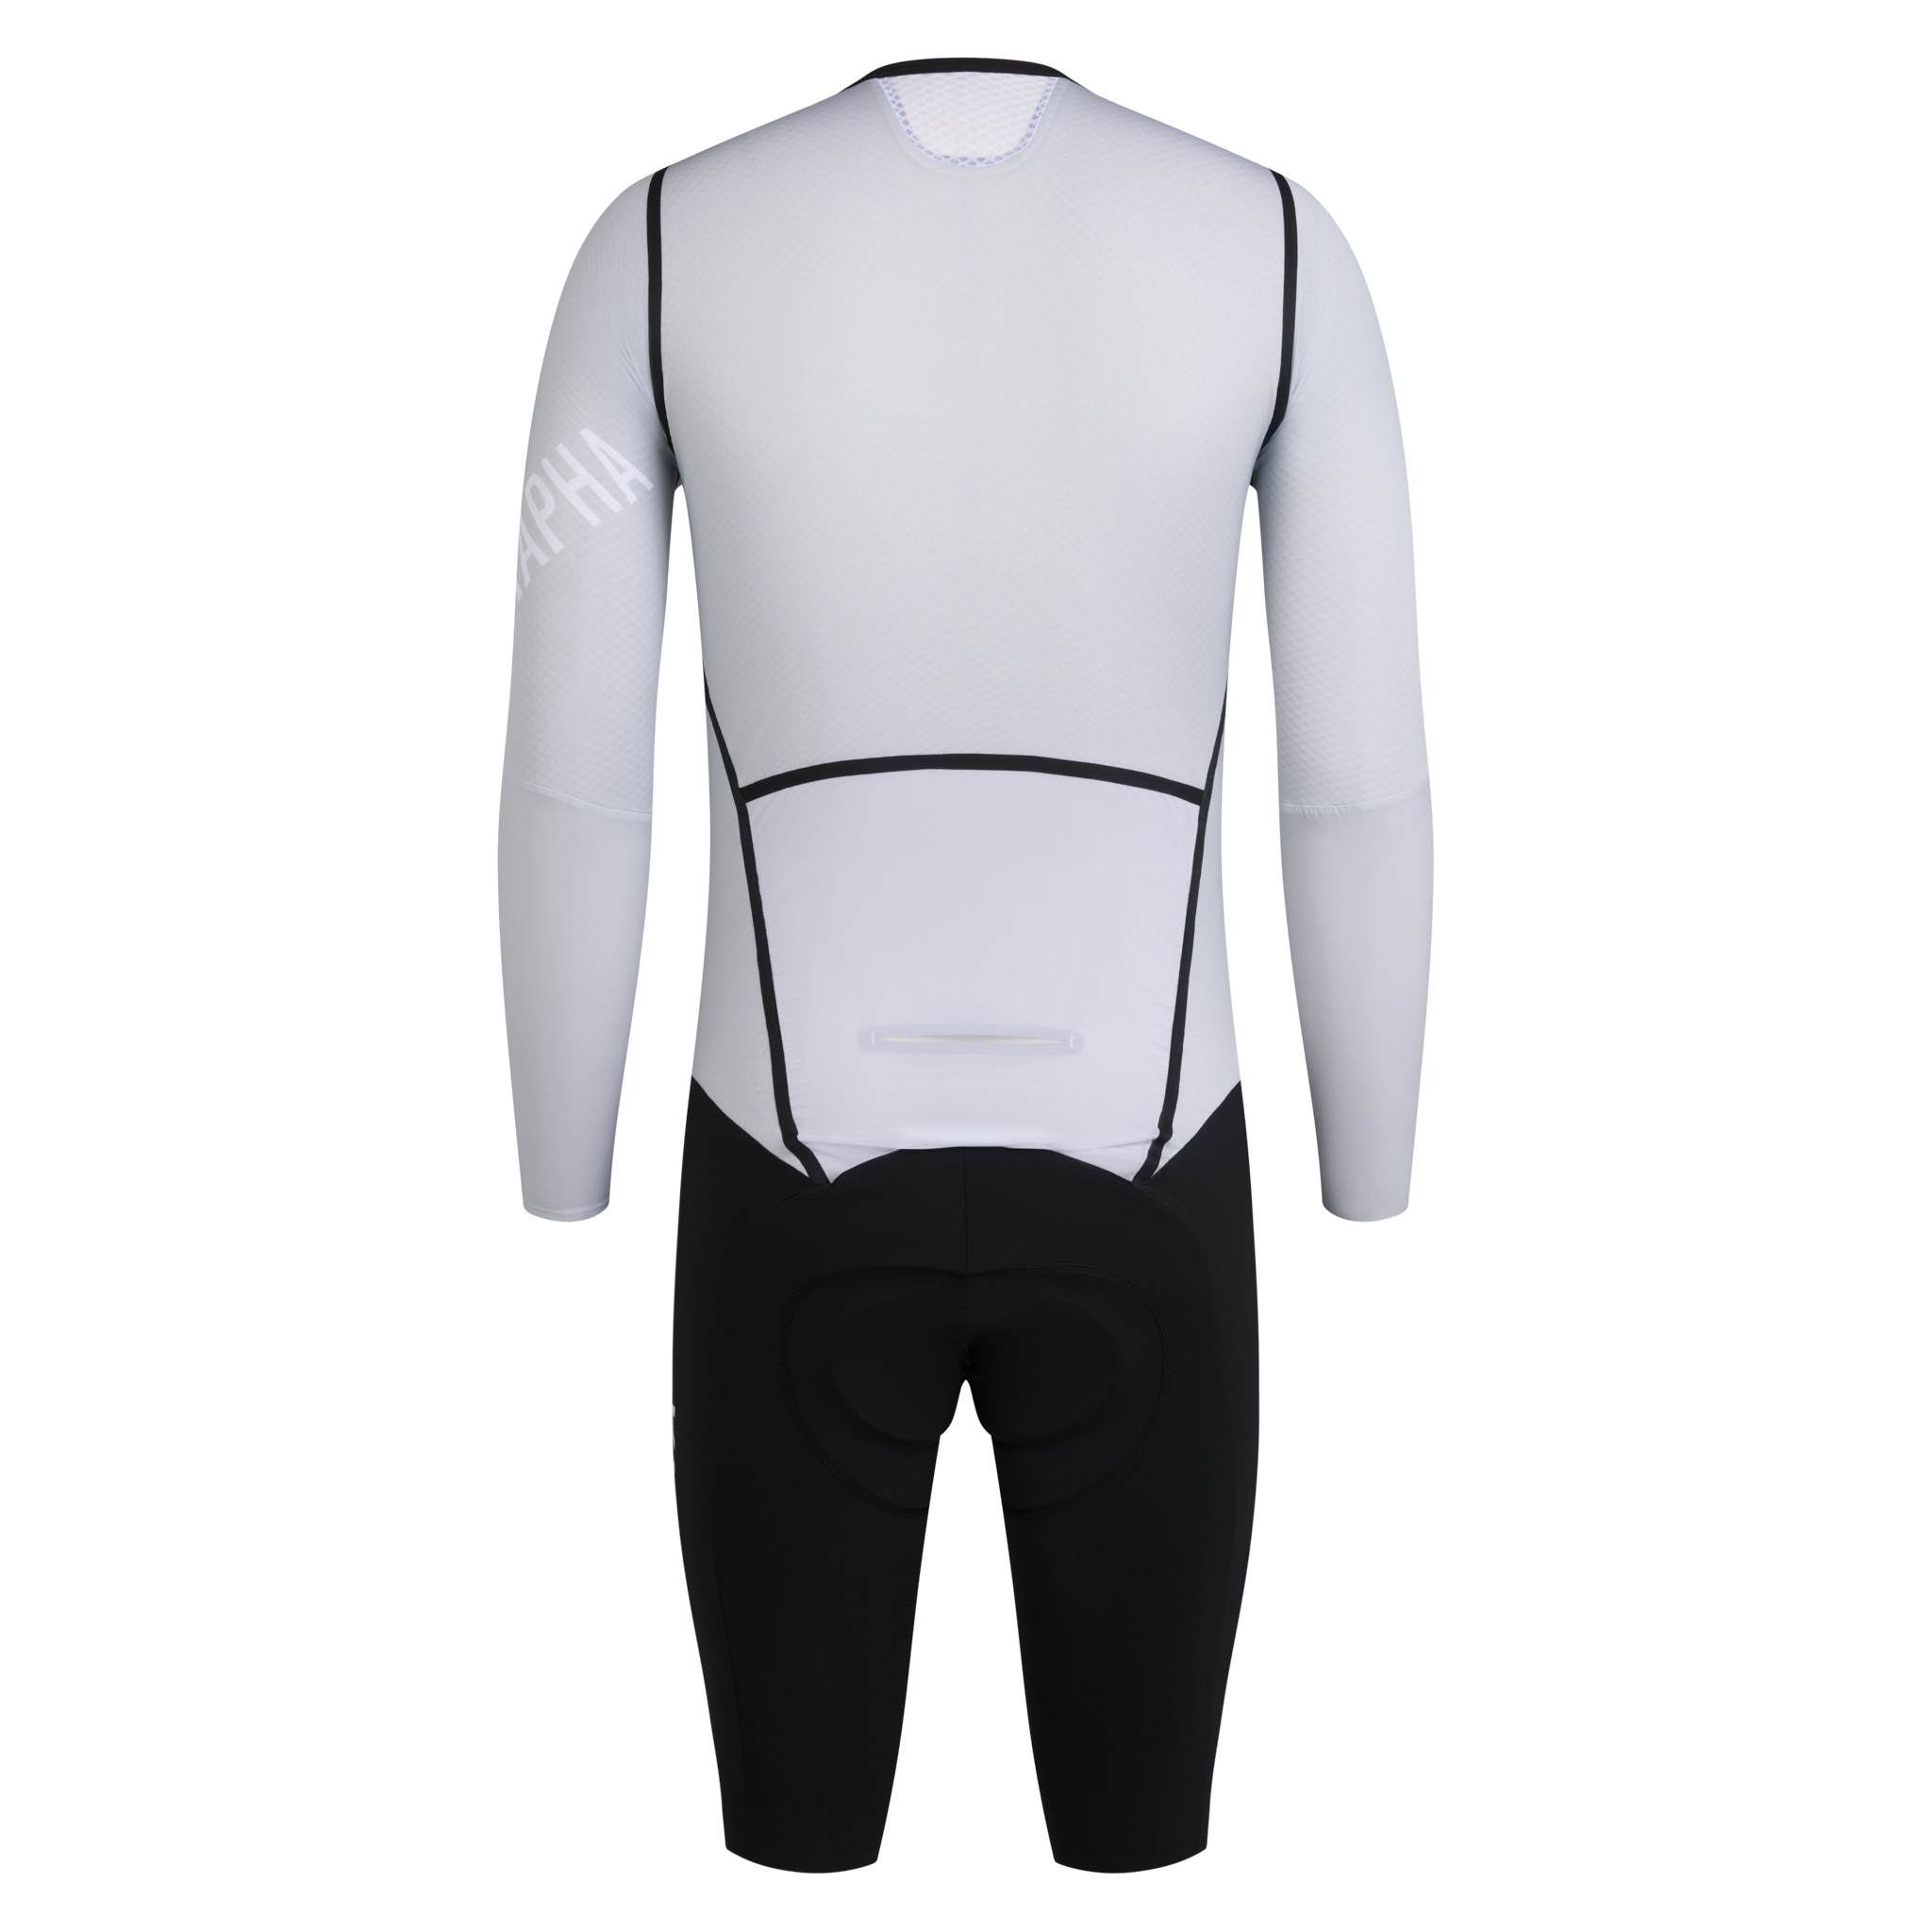 AERO men's cycling skinsuit •••• G4 Dimension